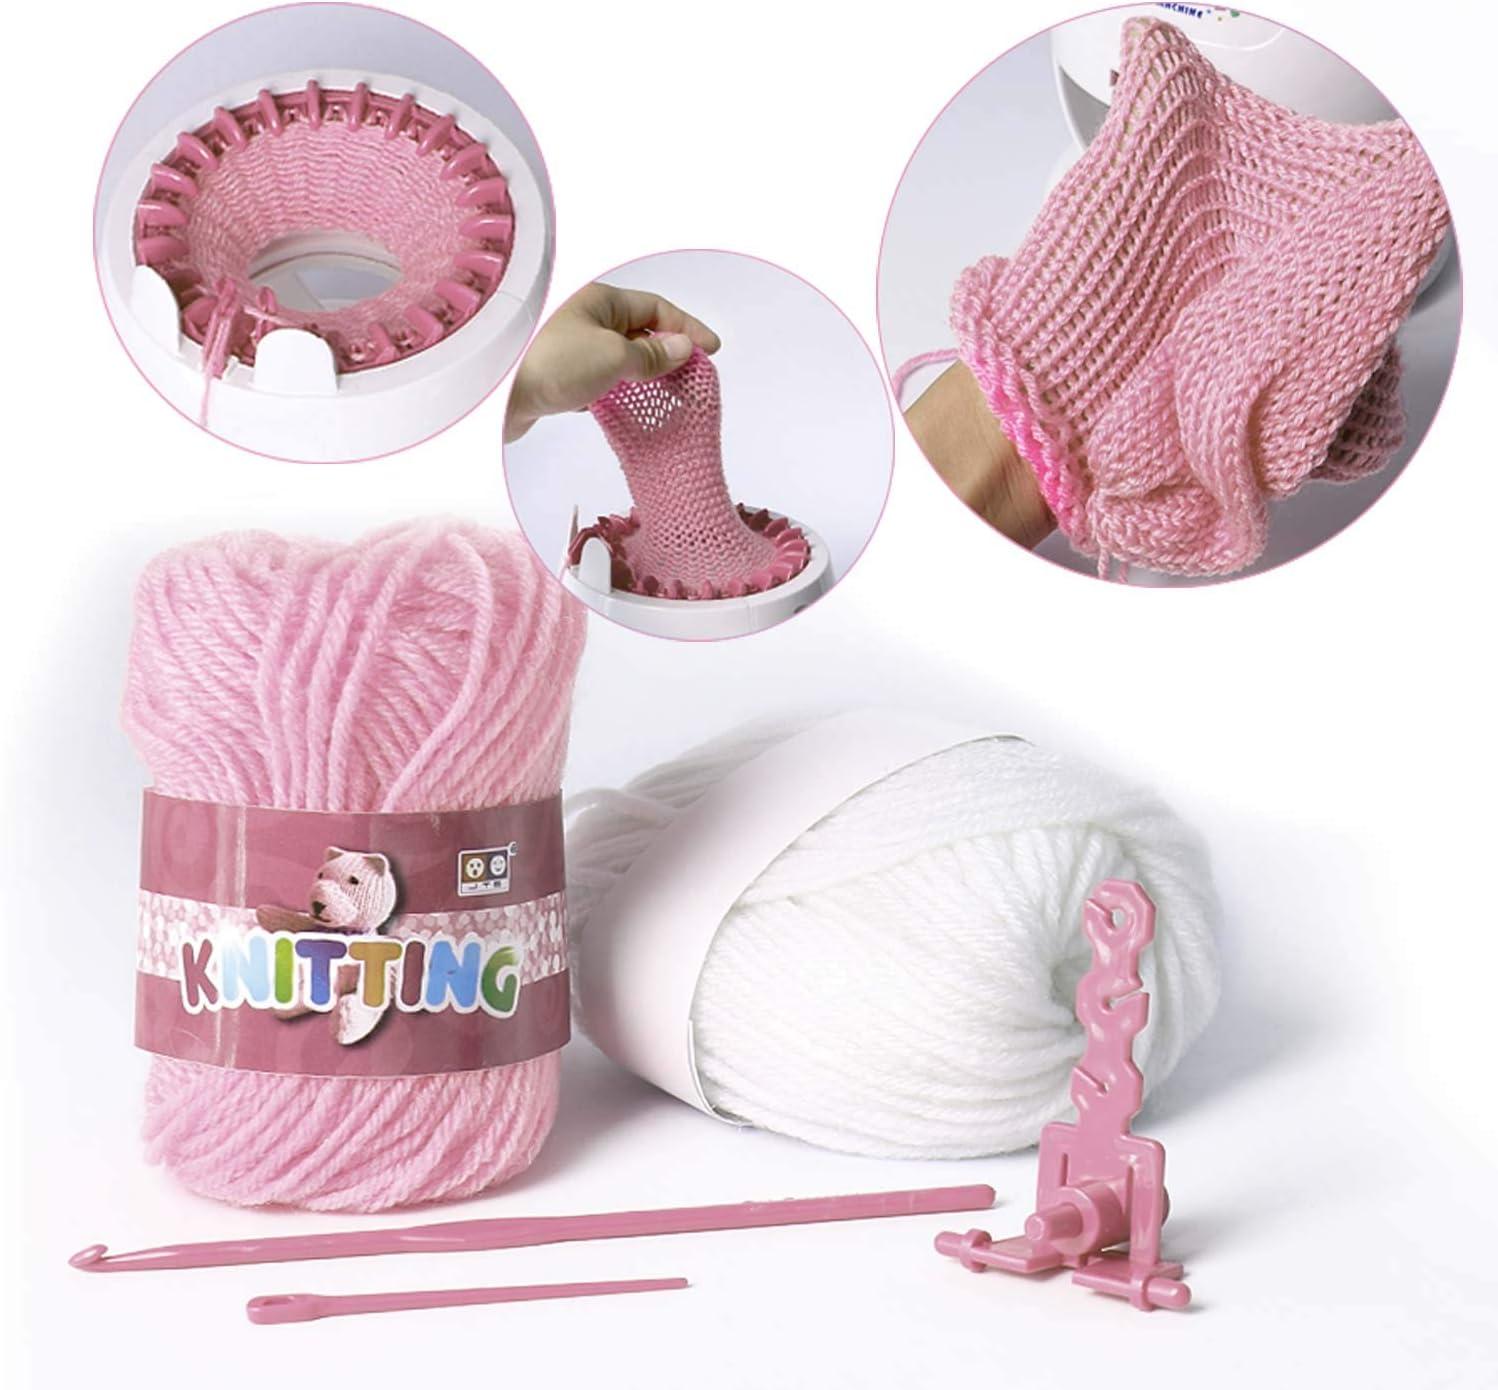 Sentro 22 Needle Knitting Machine, Knitting Loom Set Round Weaving Loom for Kids, Bunny Shaped Smart Weaver, Hat Sock Scarf Loom